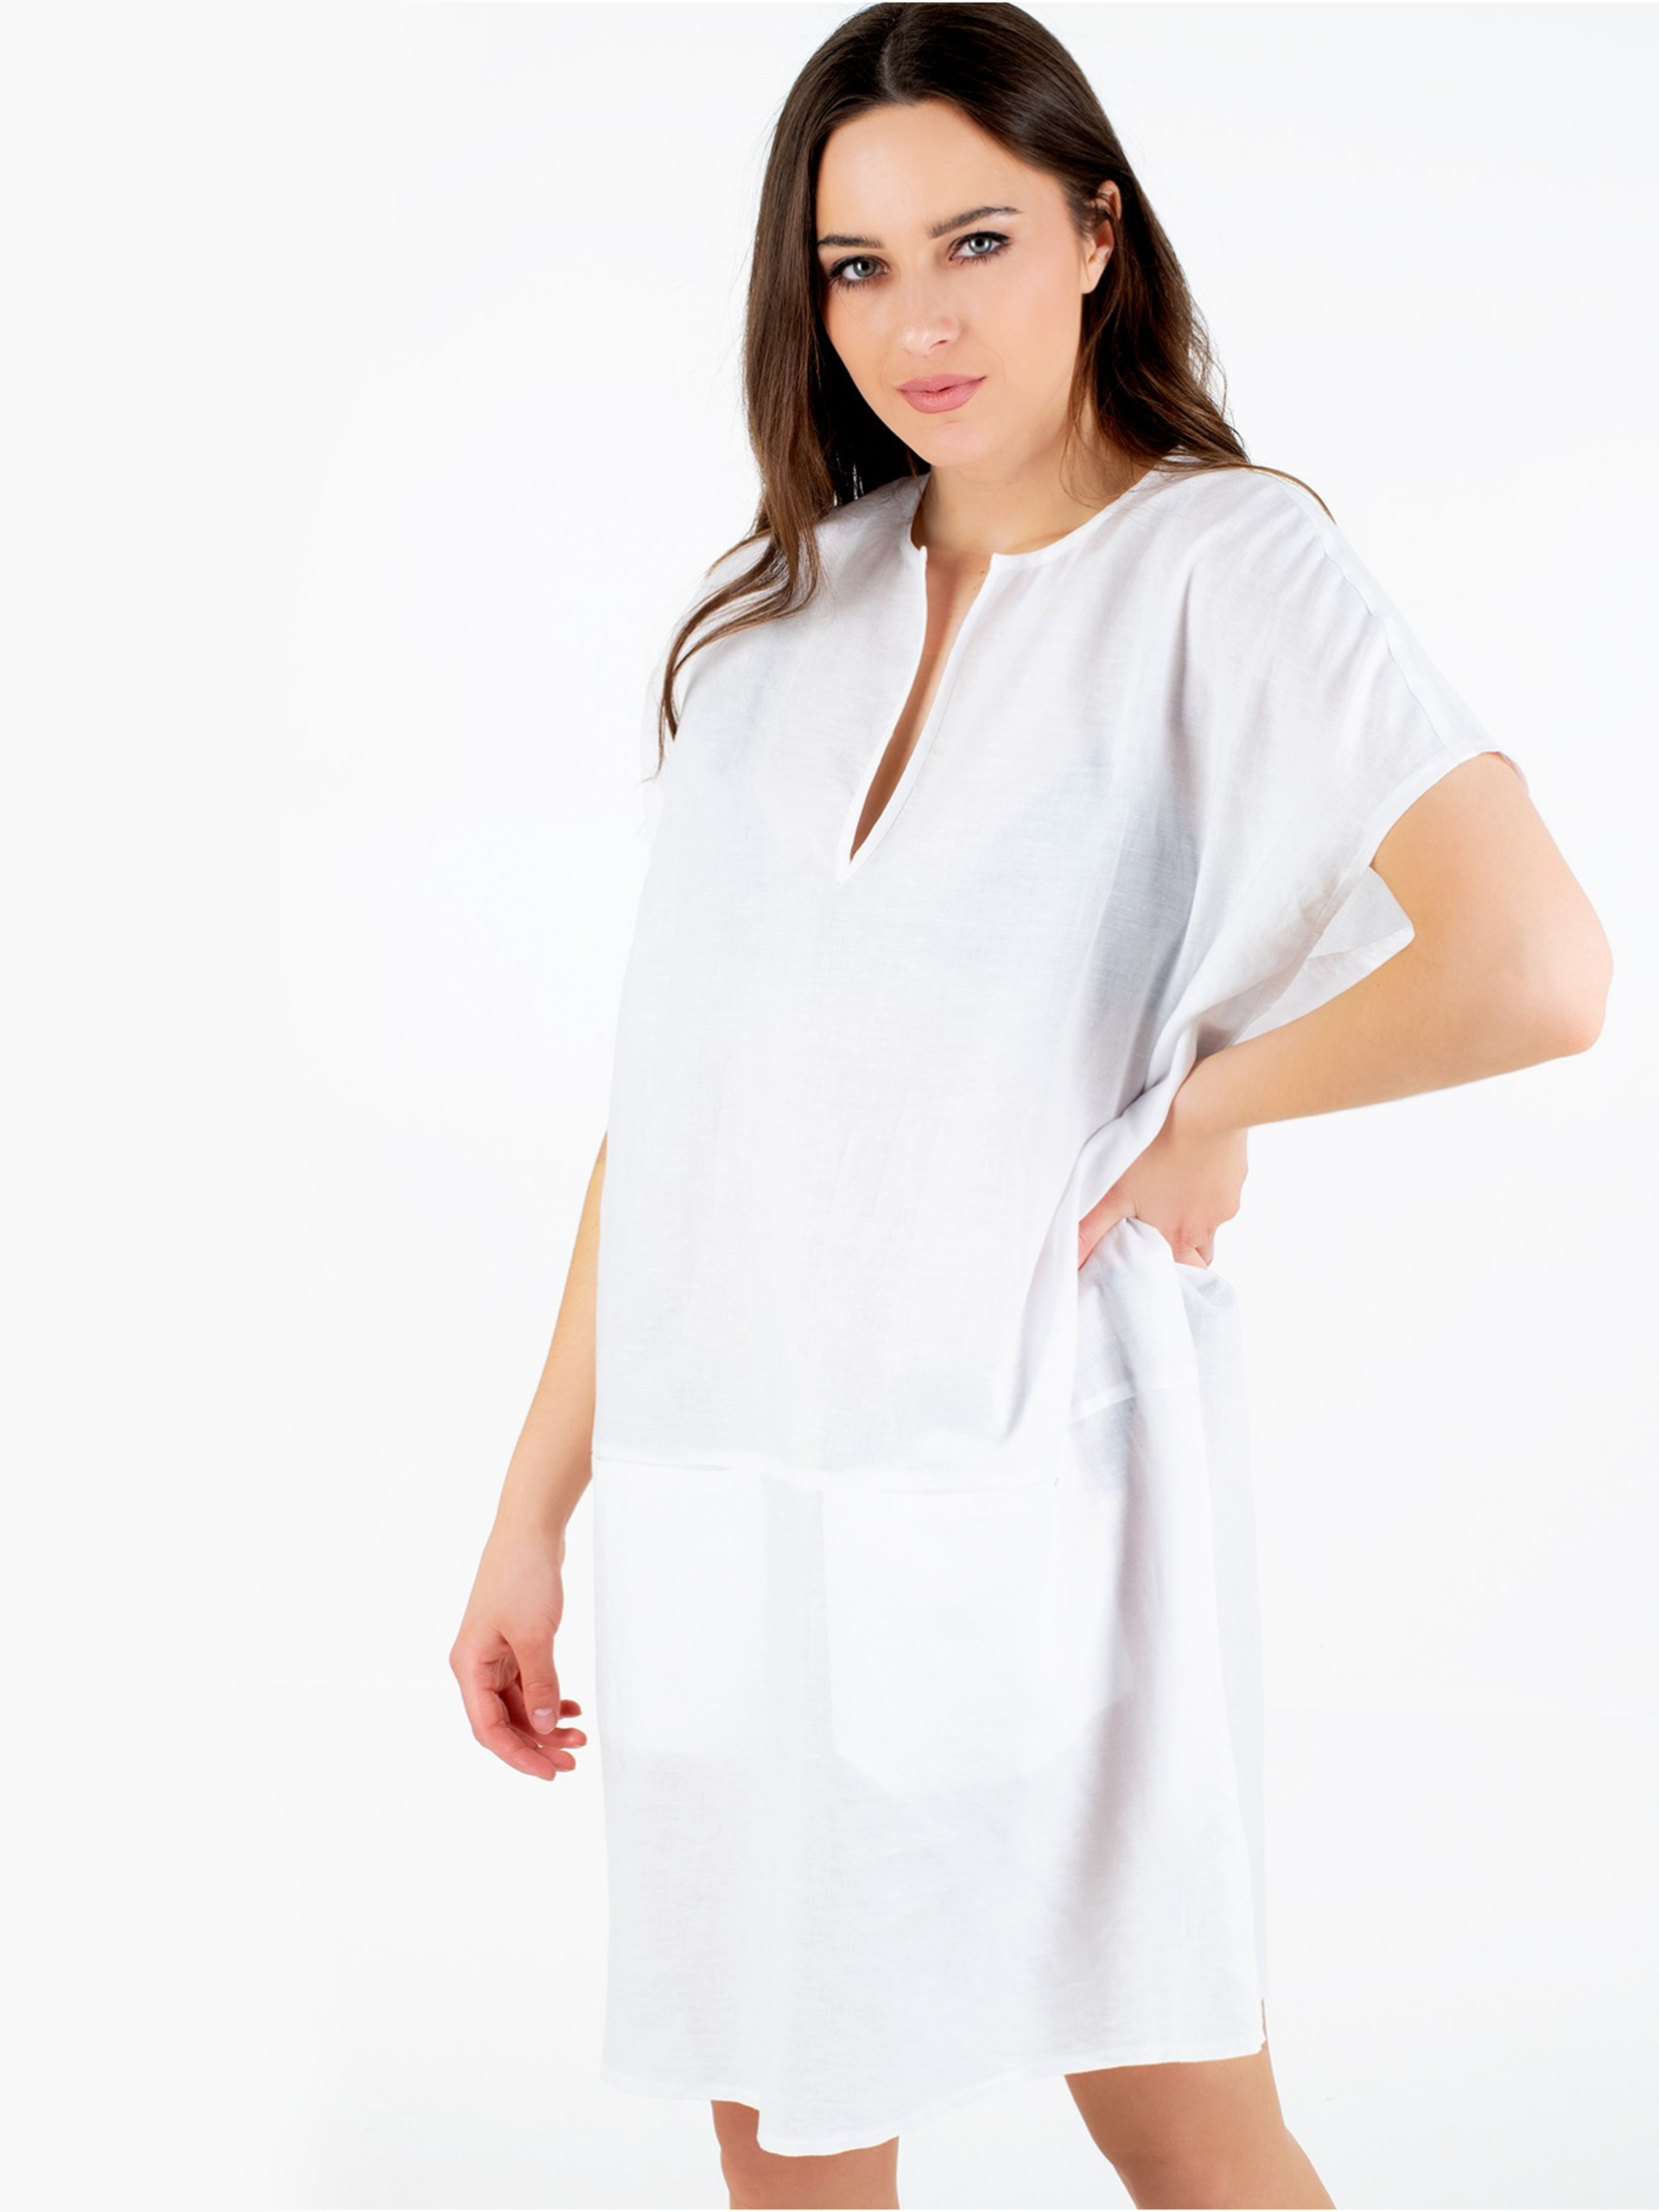 Calvin Klein dámské bílé plážové šaty - S (YCD)